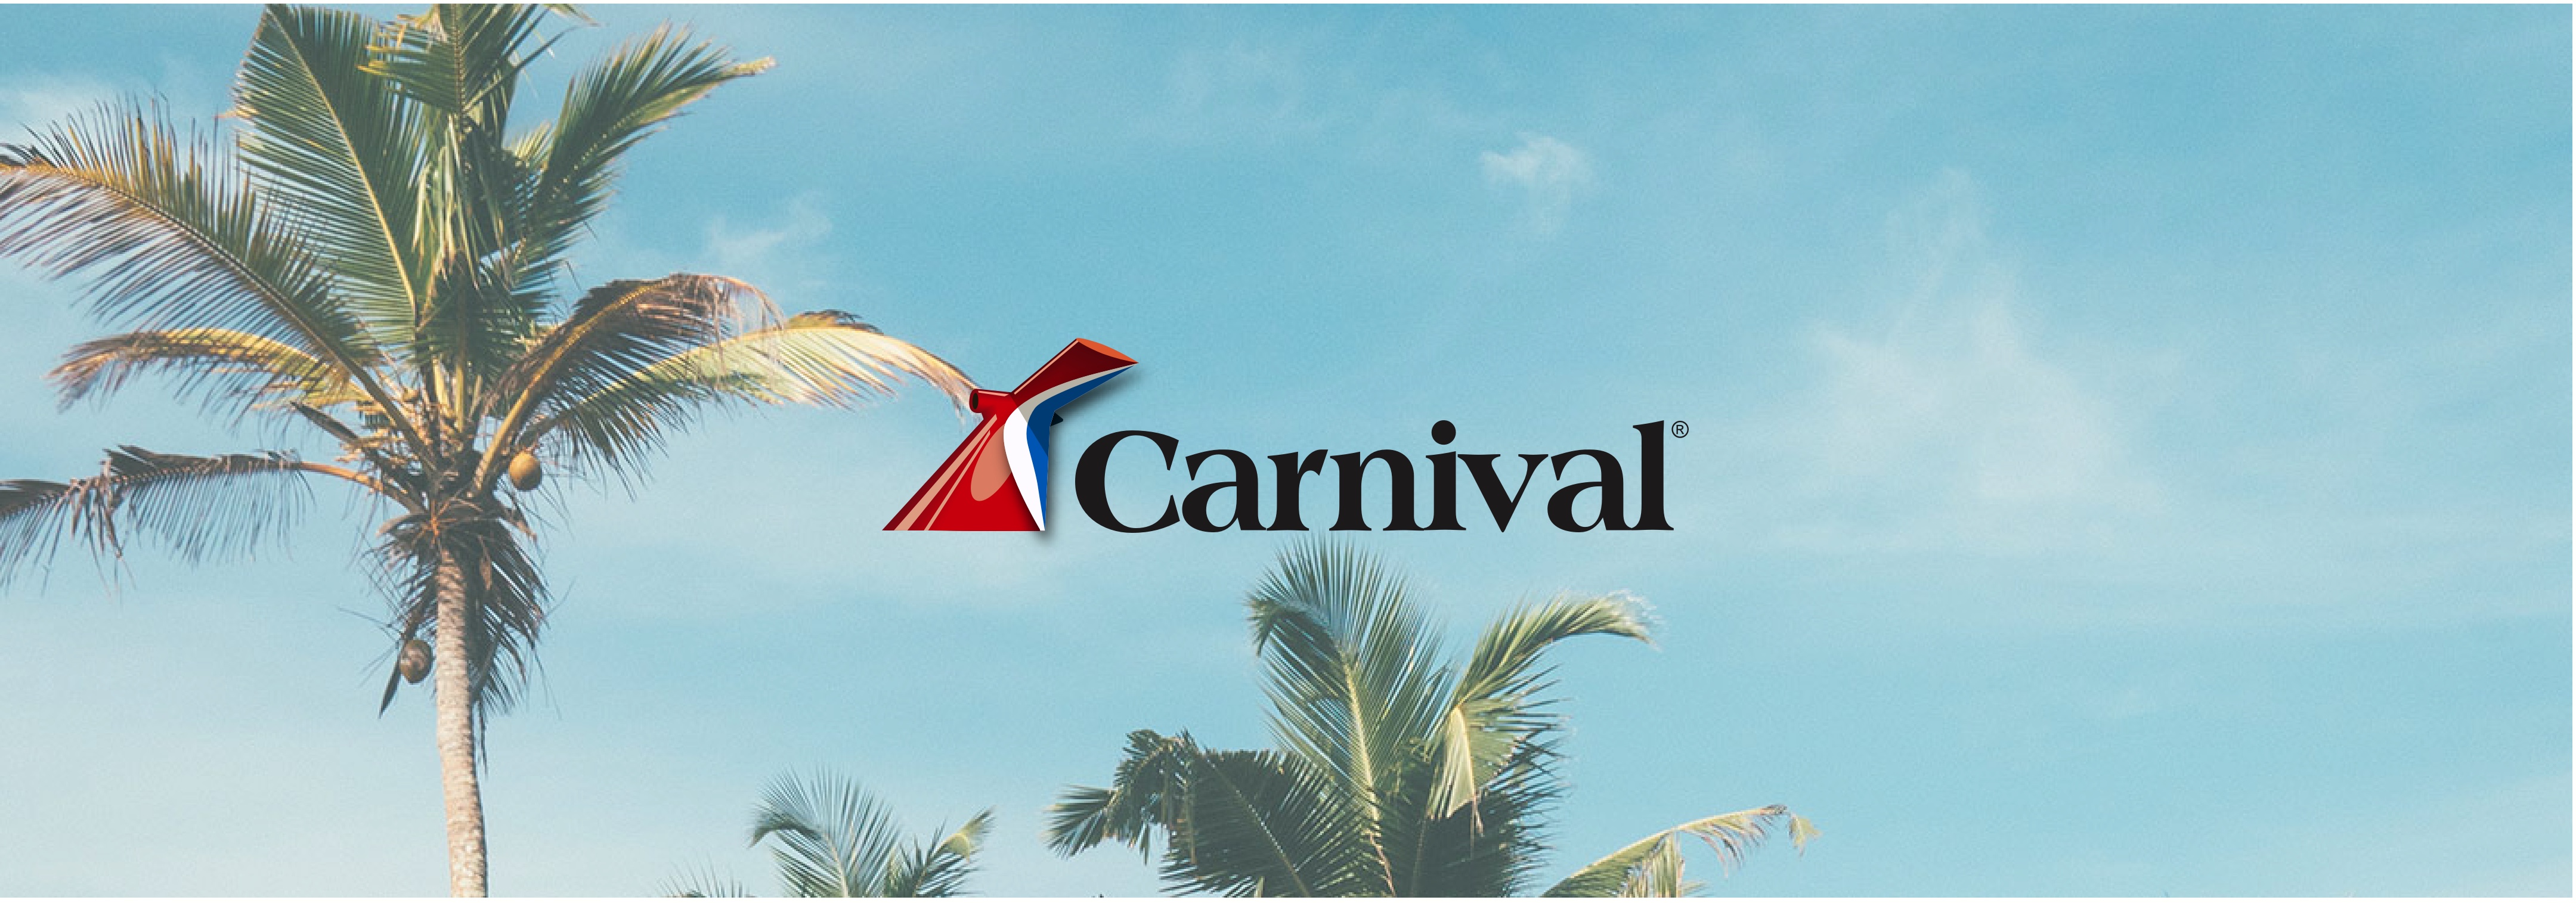 carnival-hero-banner